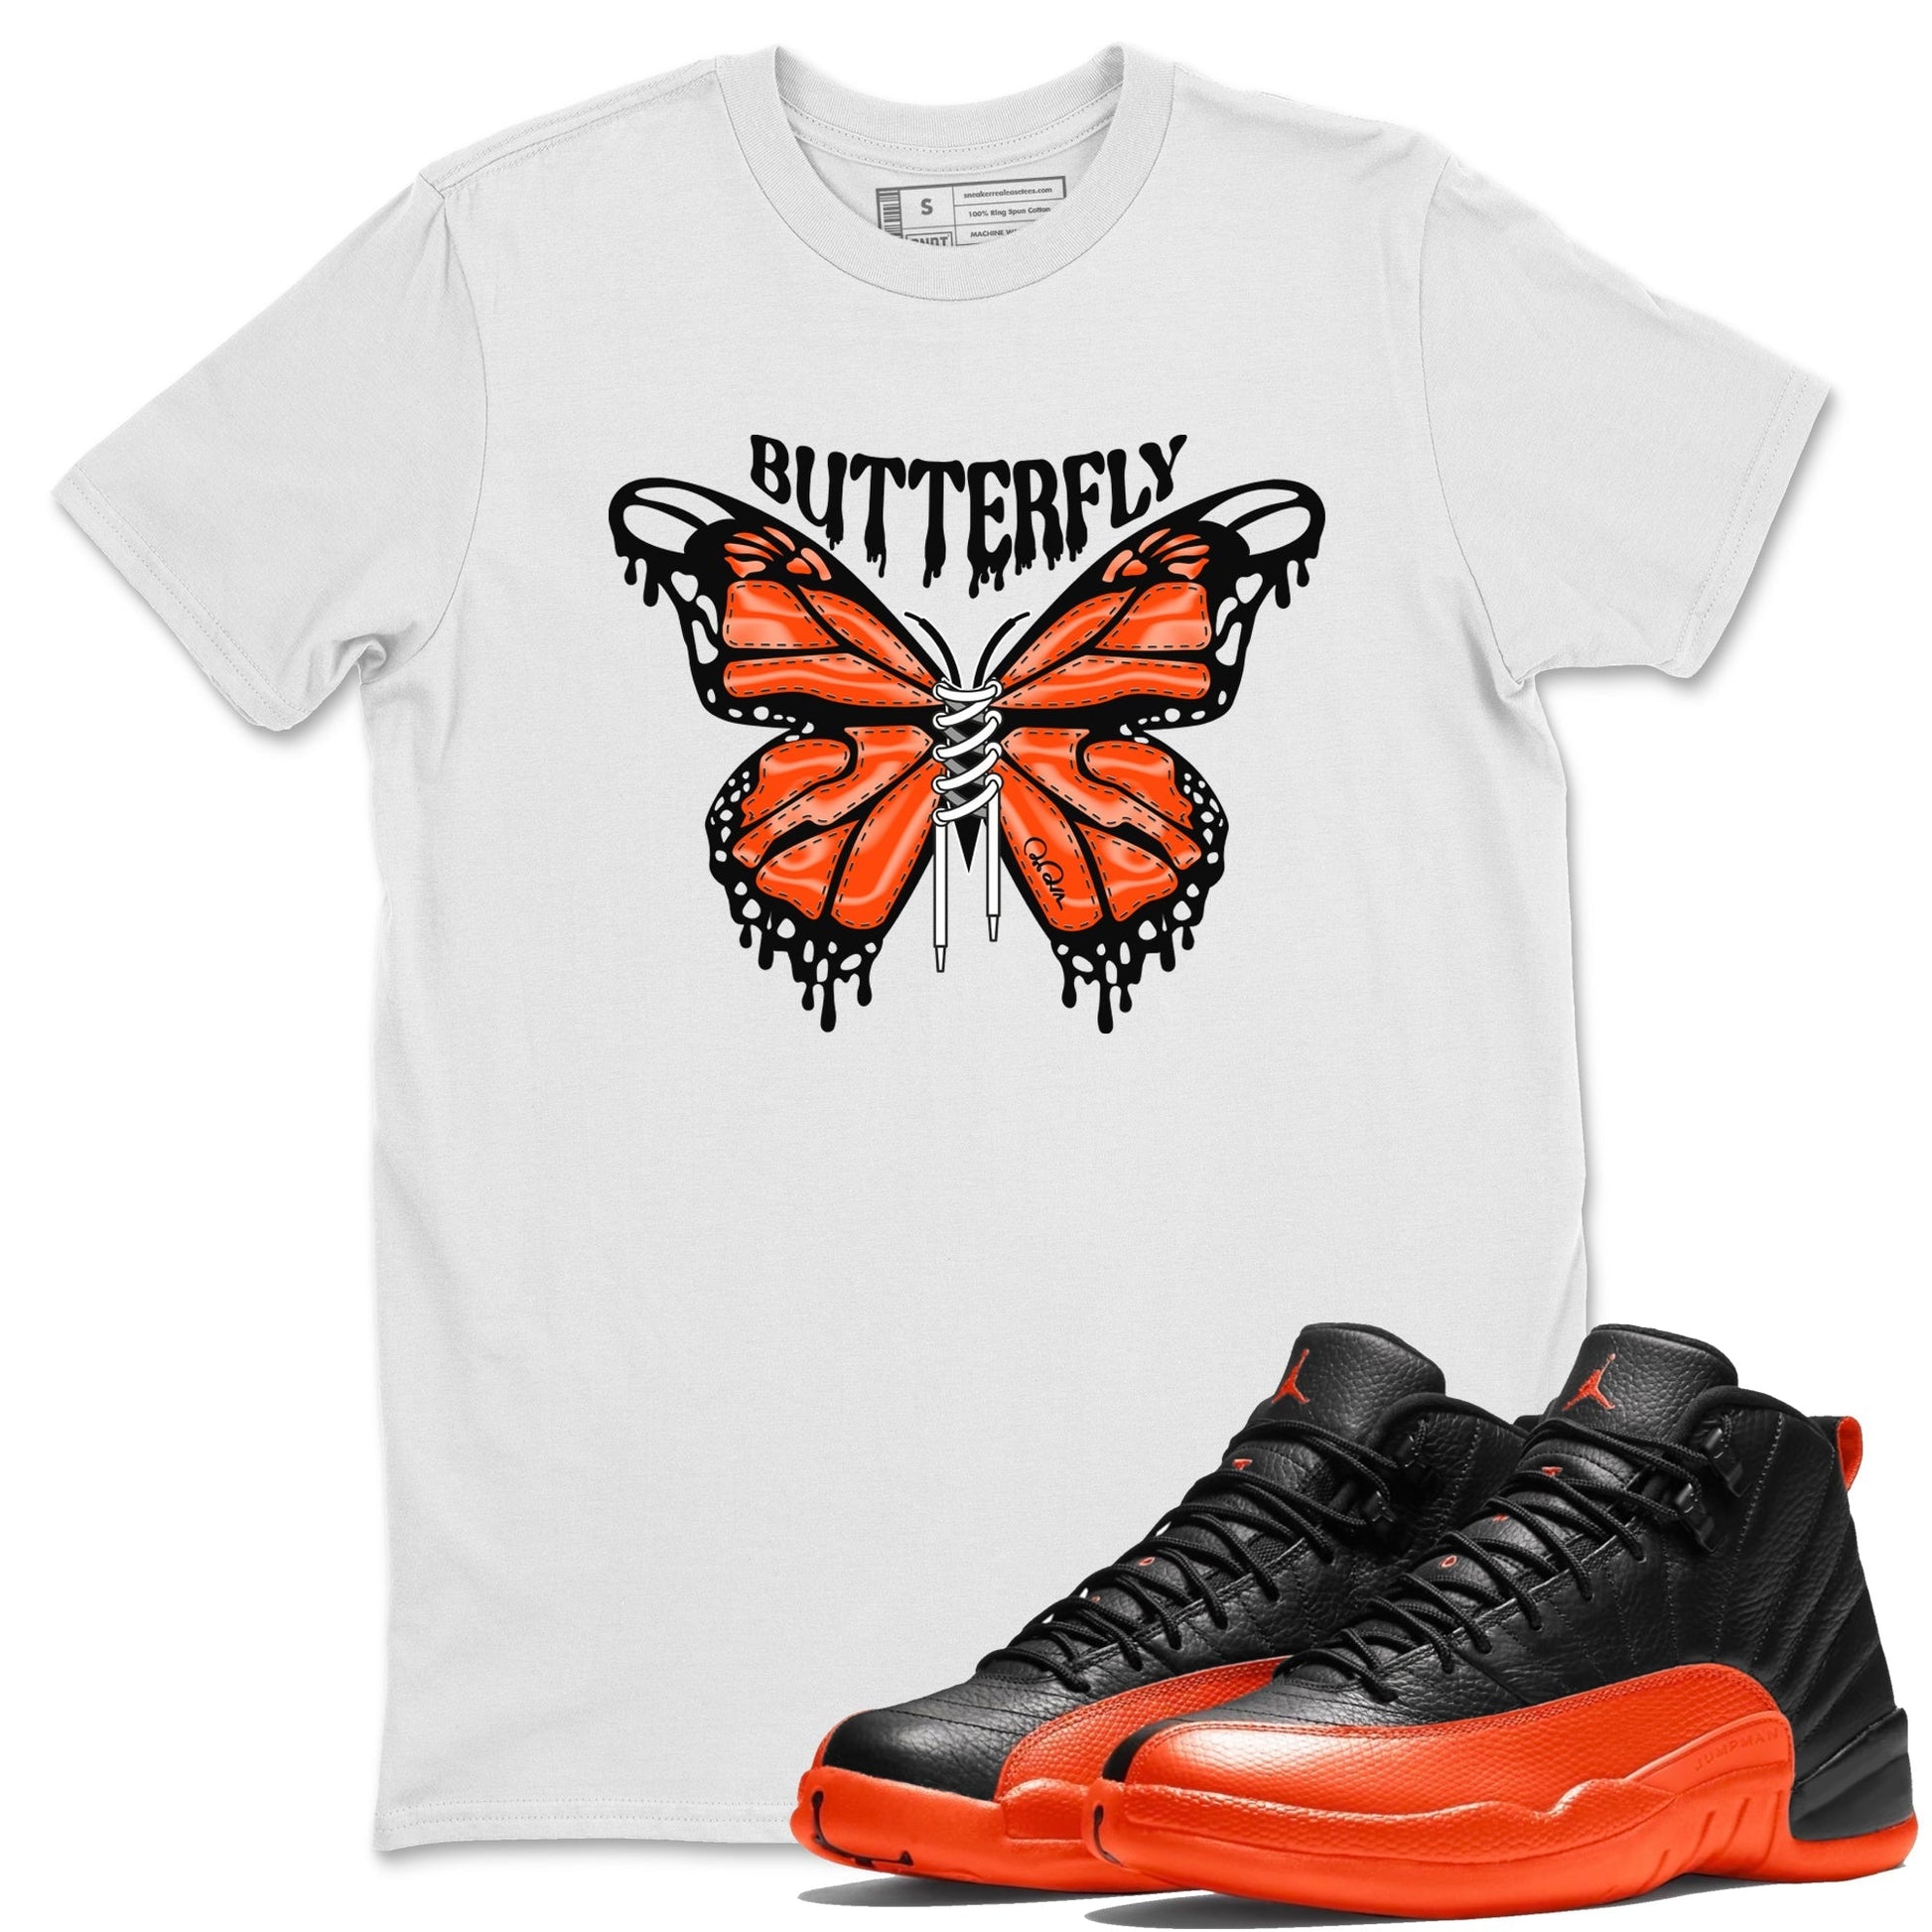 Air Jordan 12 Brilliant Orange Sneaker Match Tees Butterfly Sneaker Tees AJ12 Brilliant Orange Sneaker Release Tees Unisex Shirts White 1